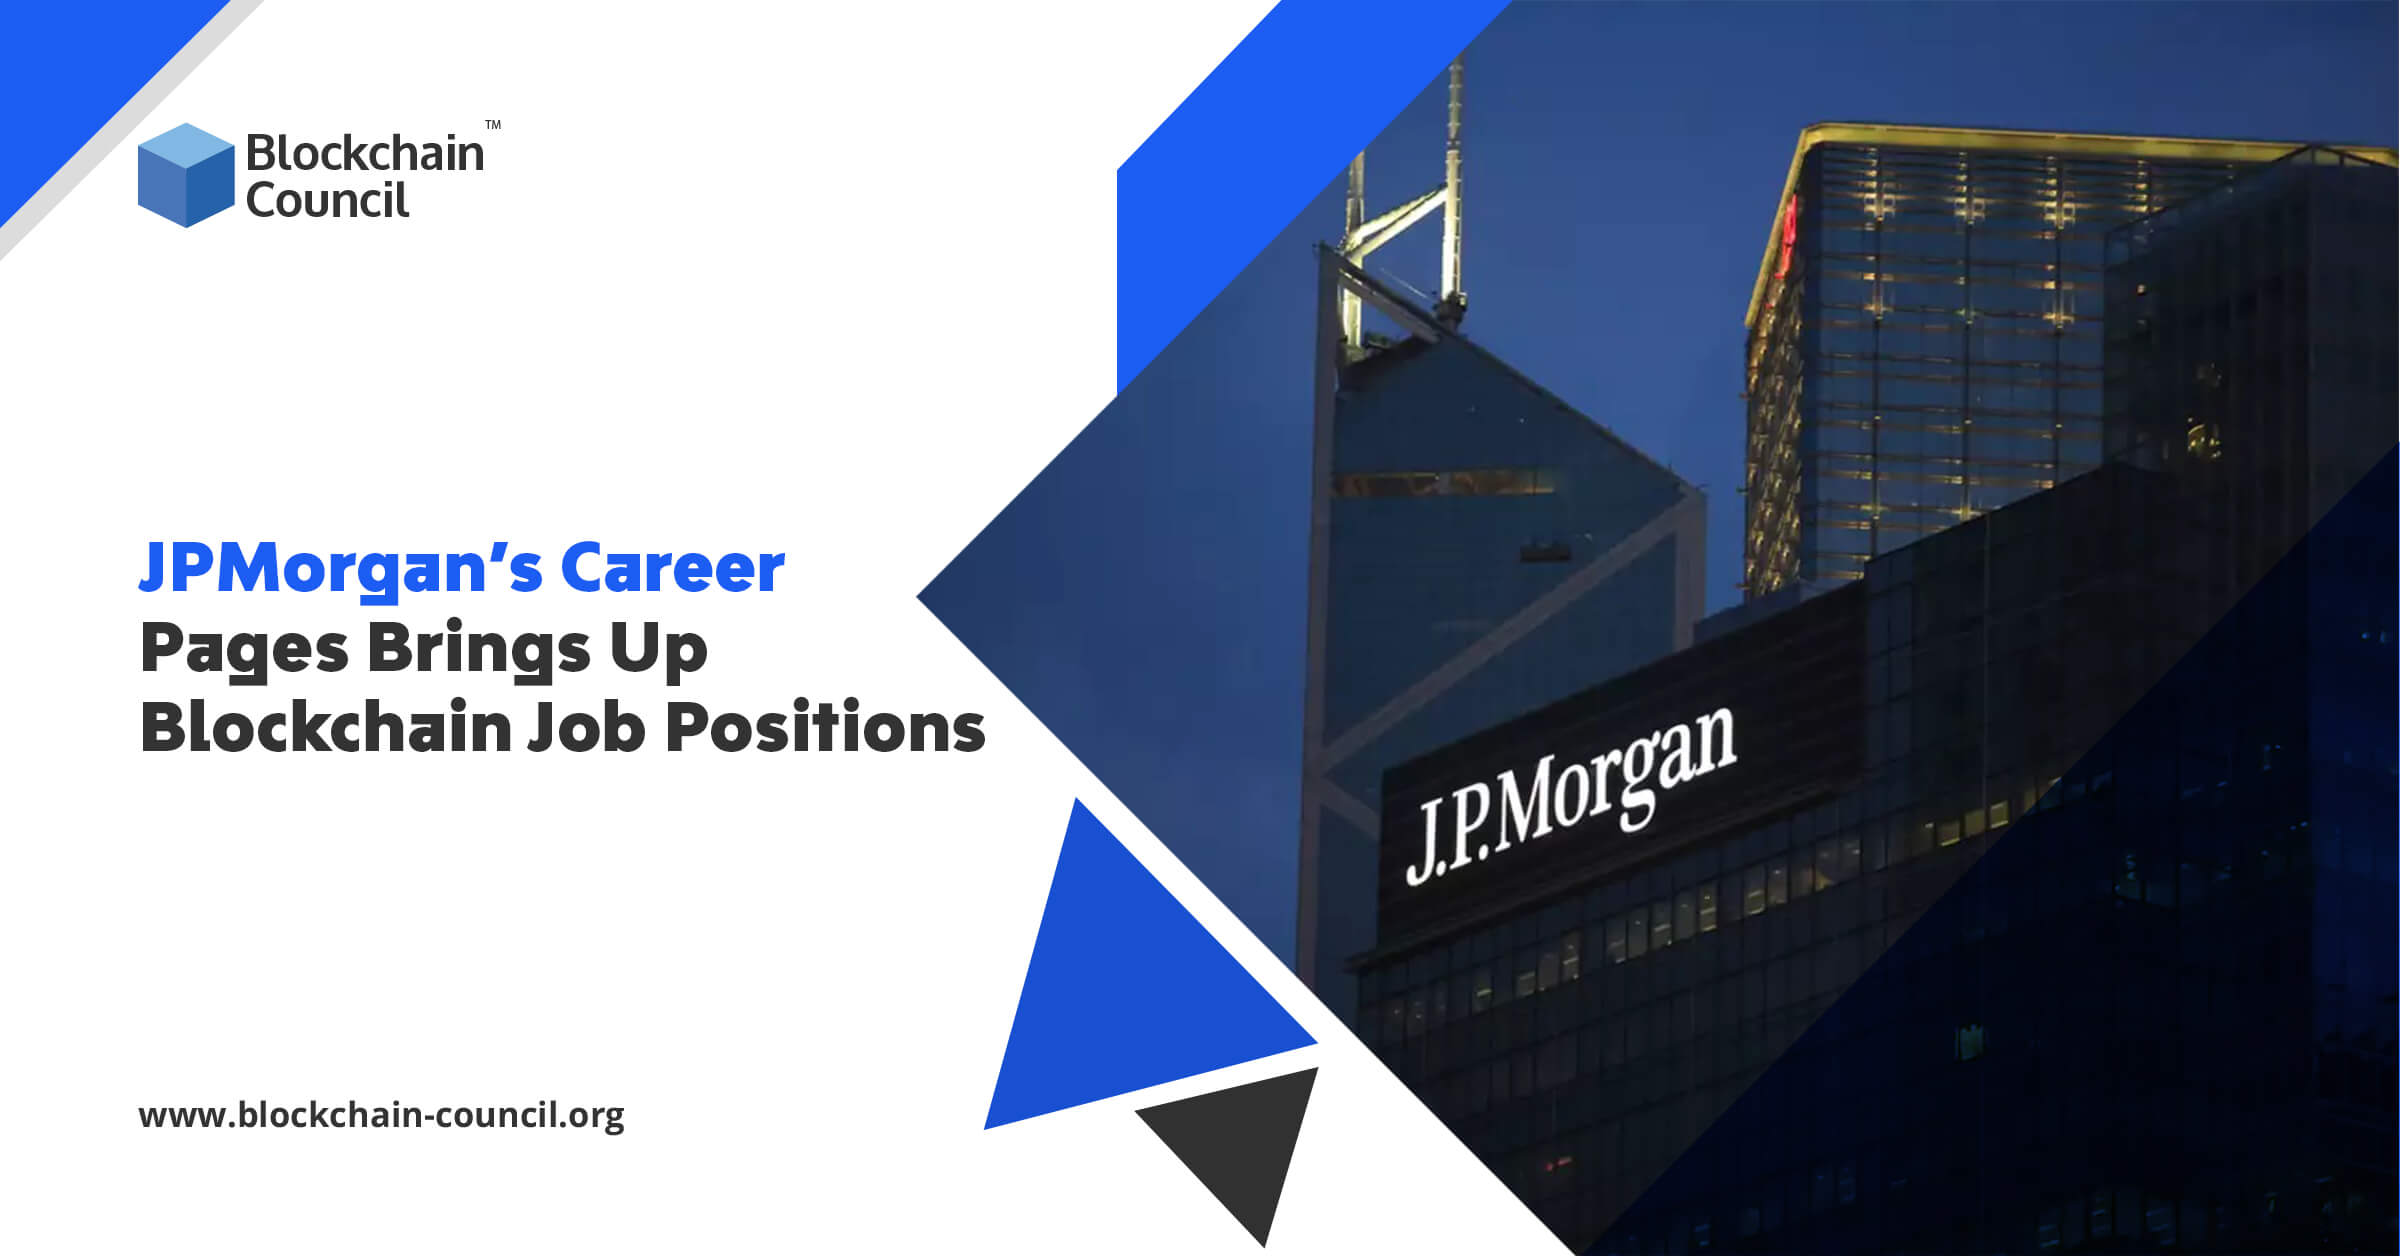 JPMorgan’s Career Pages Brings Up Blockchain Job Positions